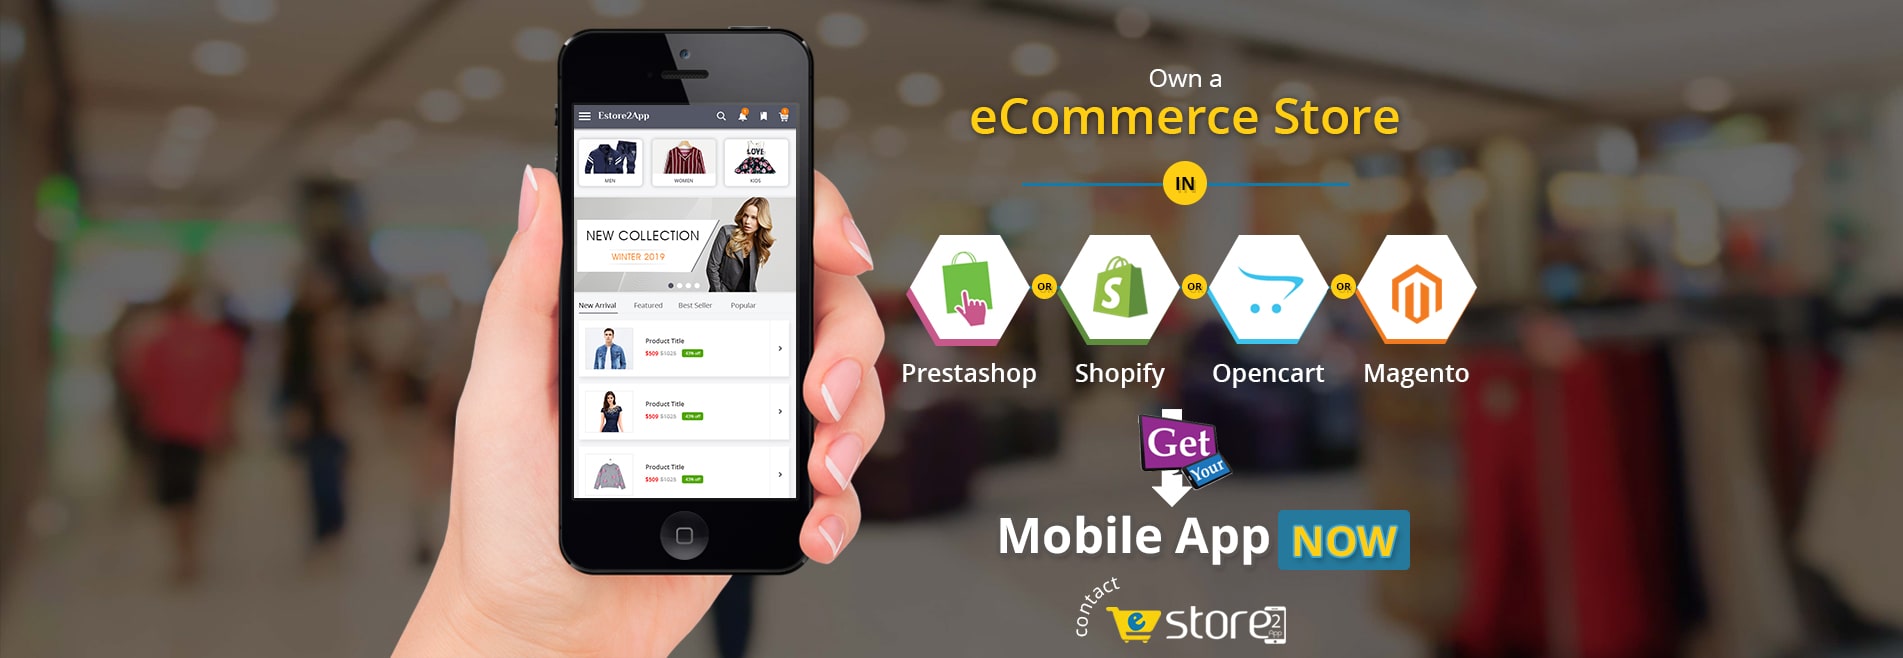 eStore2pp Mobile App Builder